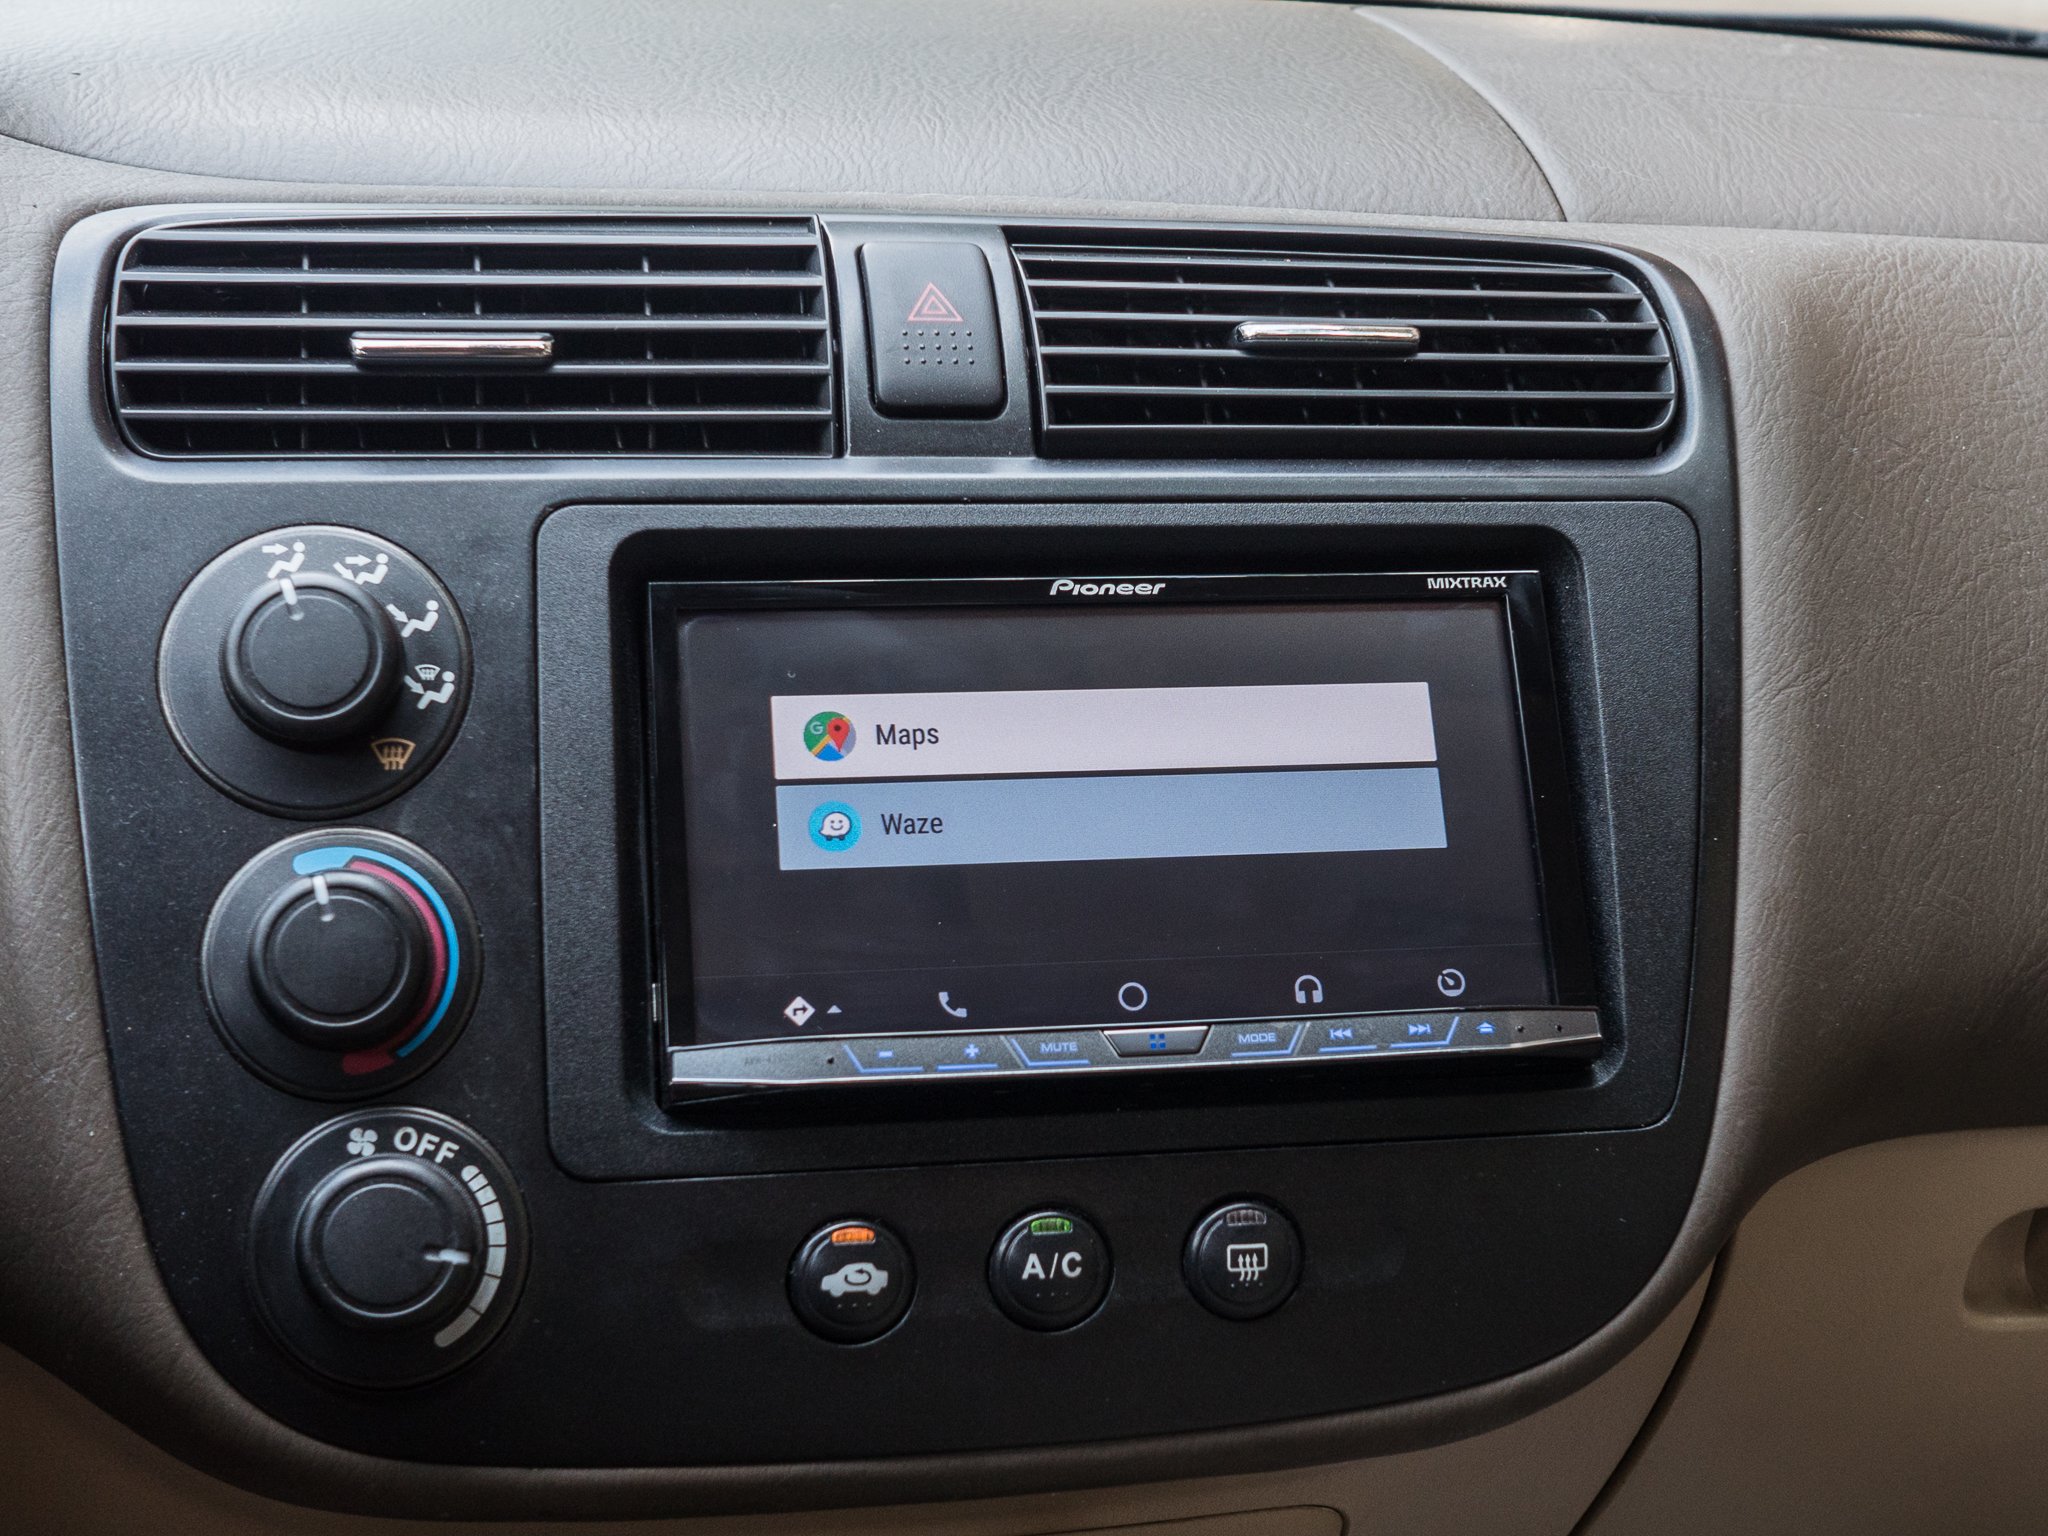 Waze on Android Auto